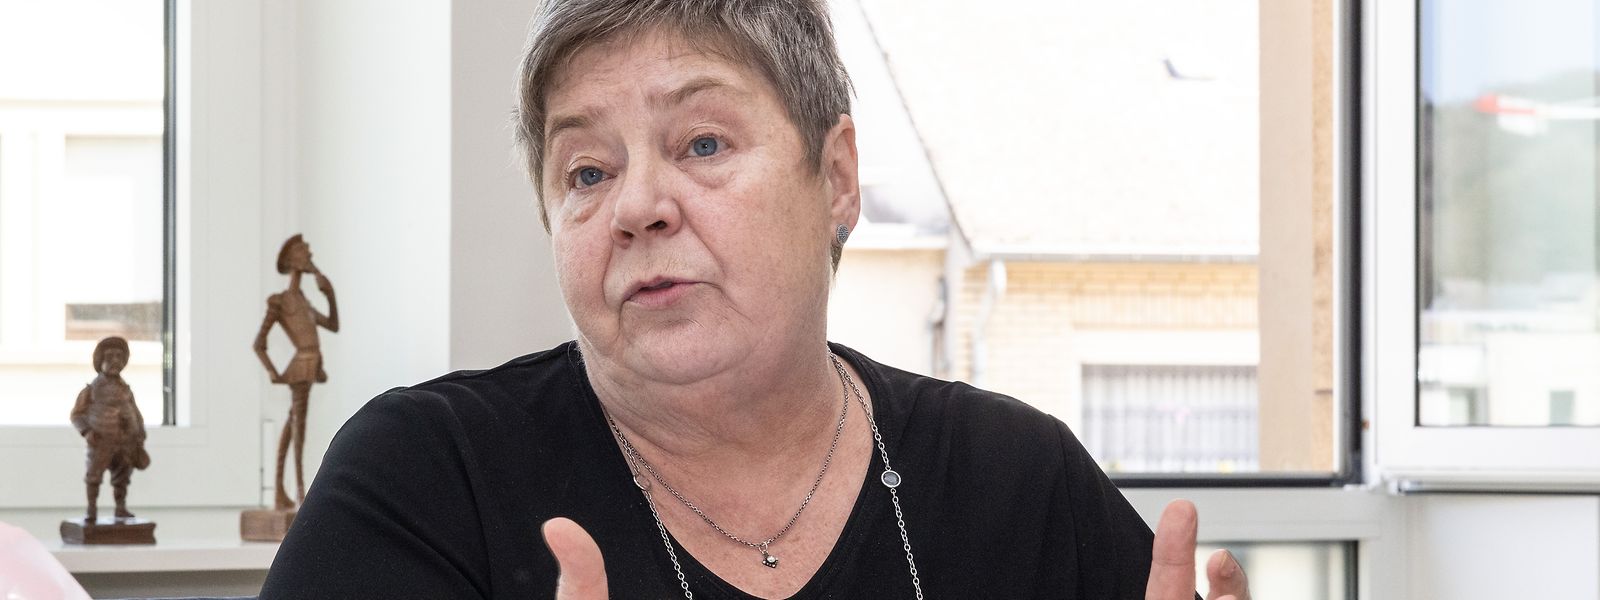 Christiane Brassel-Rausch était active au sein du conseil communal de Differdange depuis 2017.